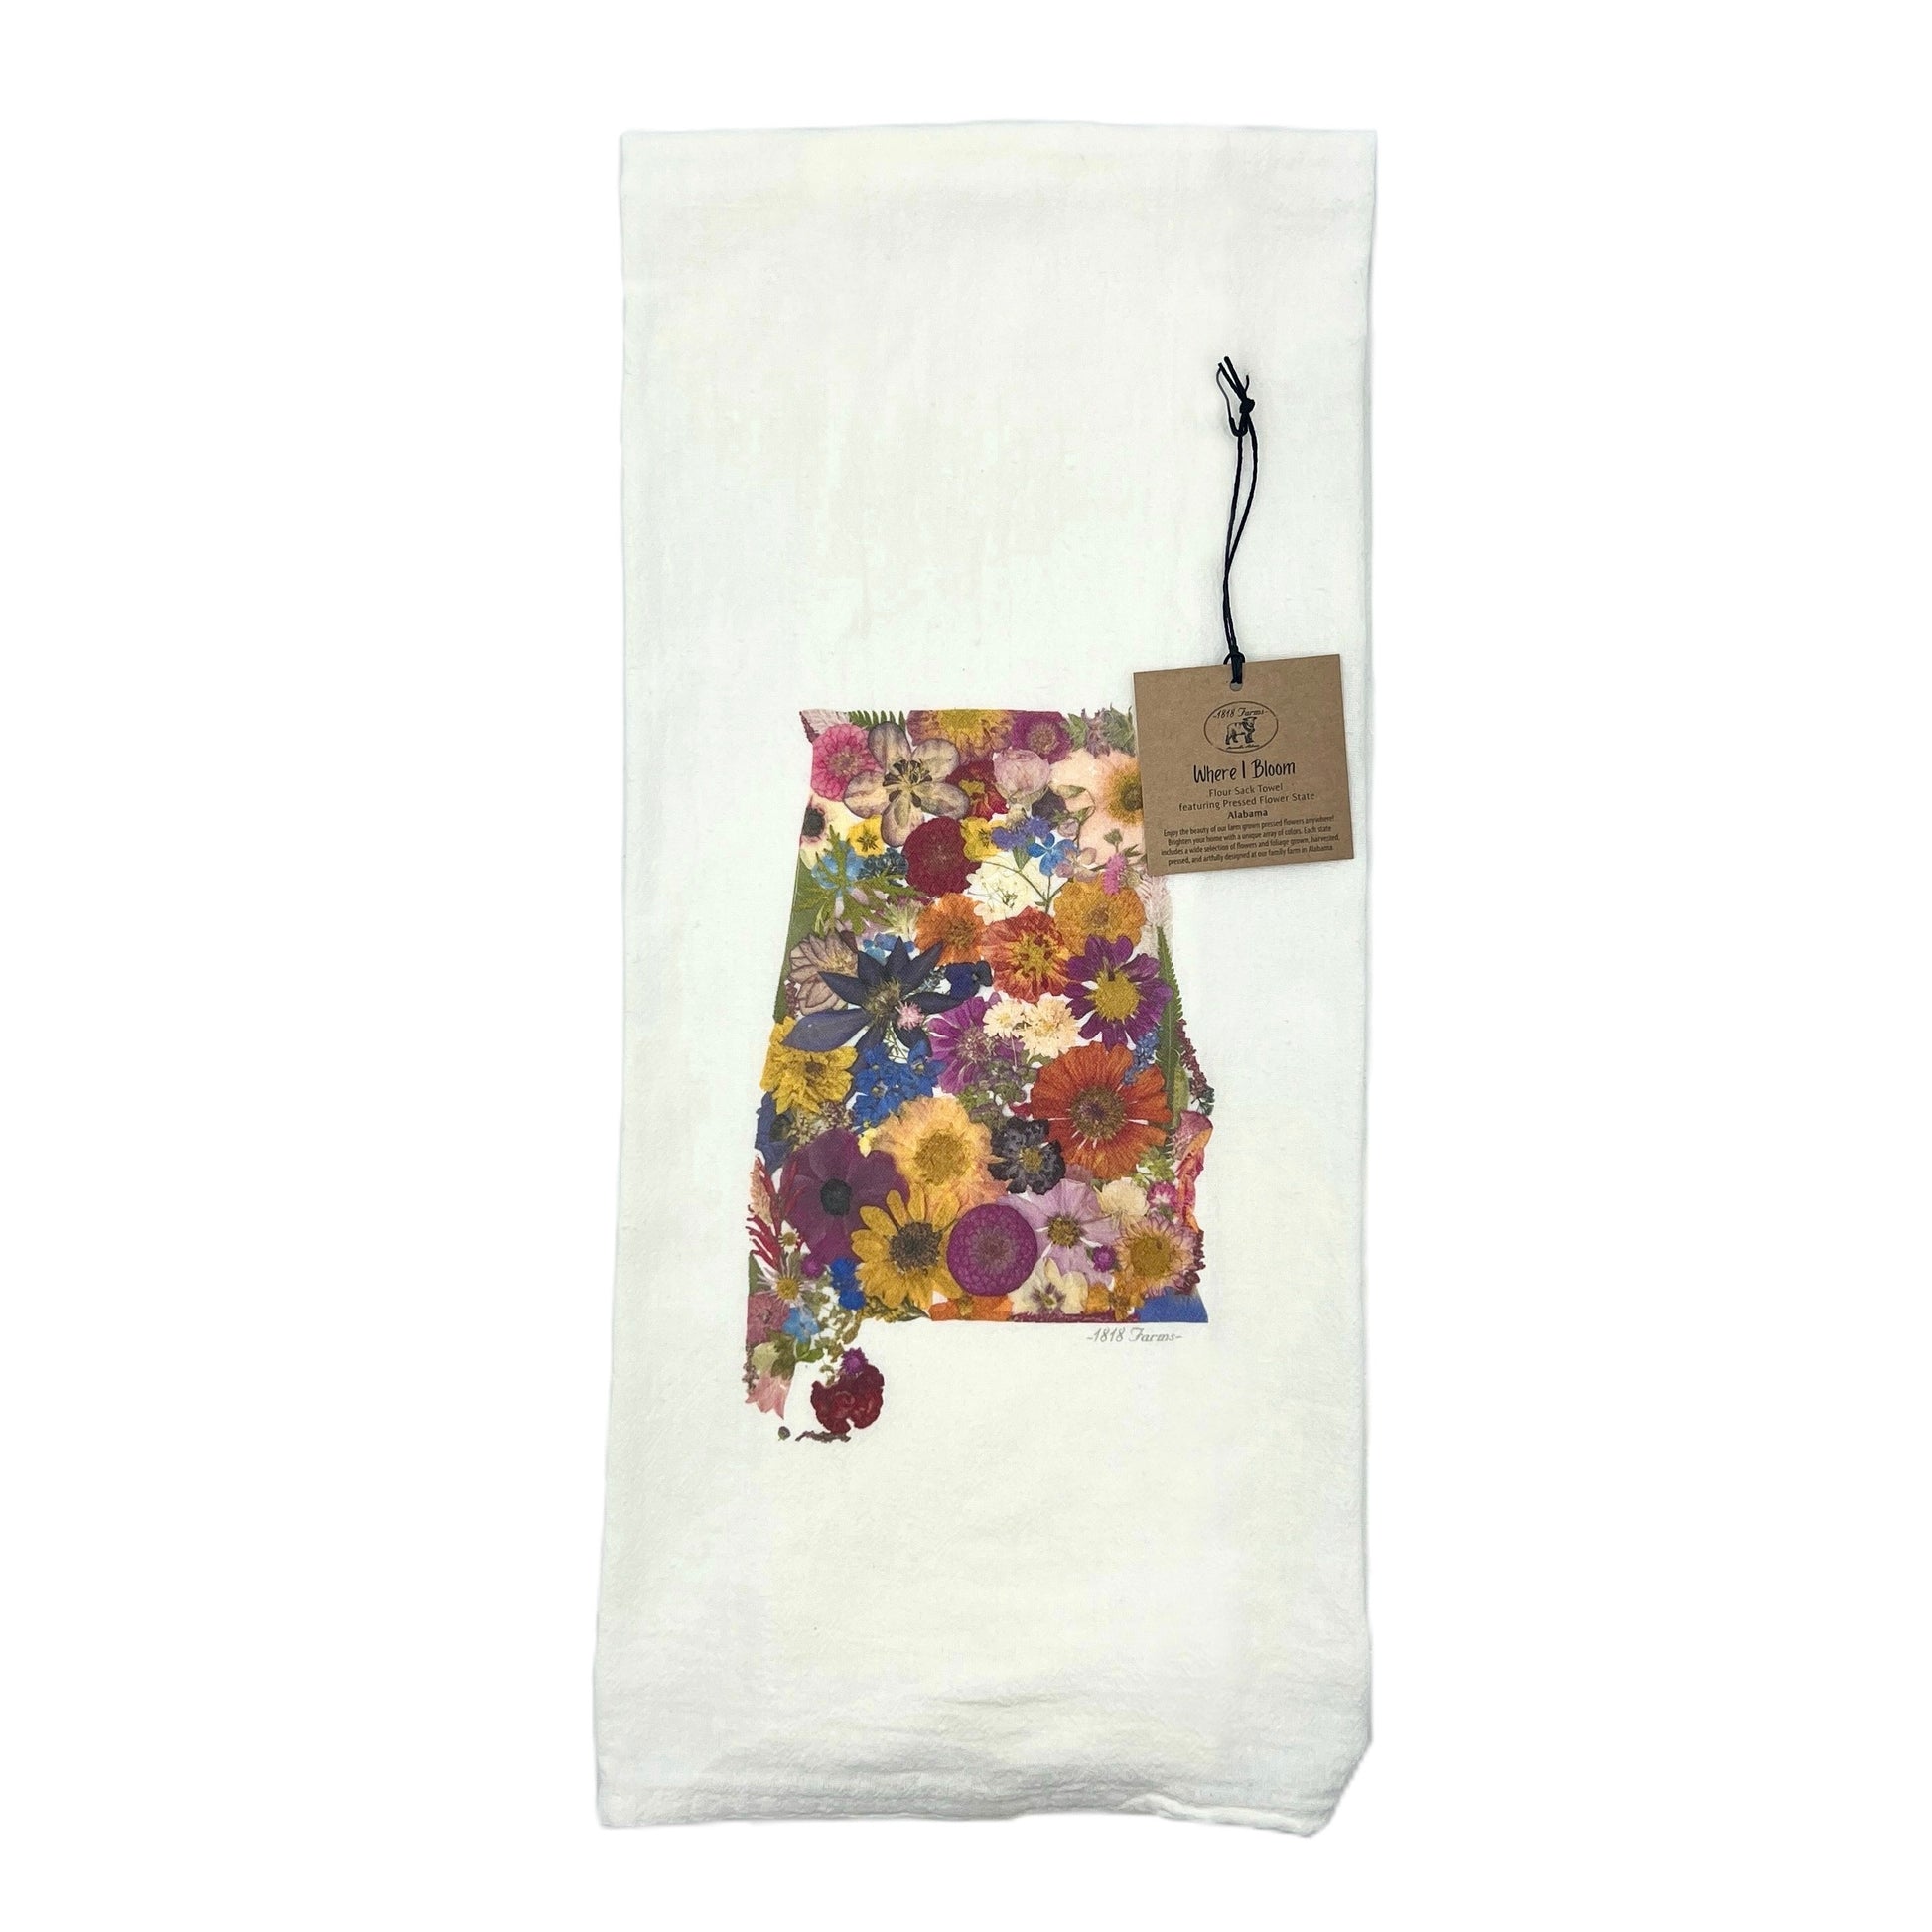 State Themed Flour Sack Towel  - "Where I Bloom" Collection Towel 1818 Farms Alabama  